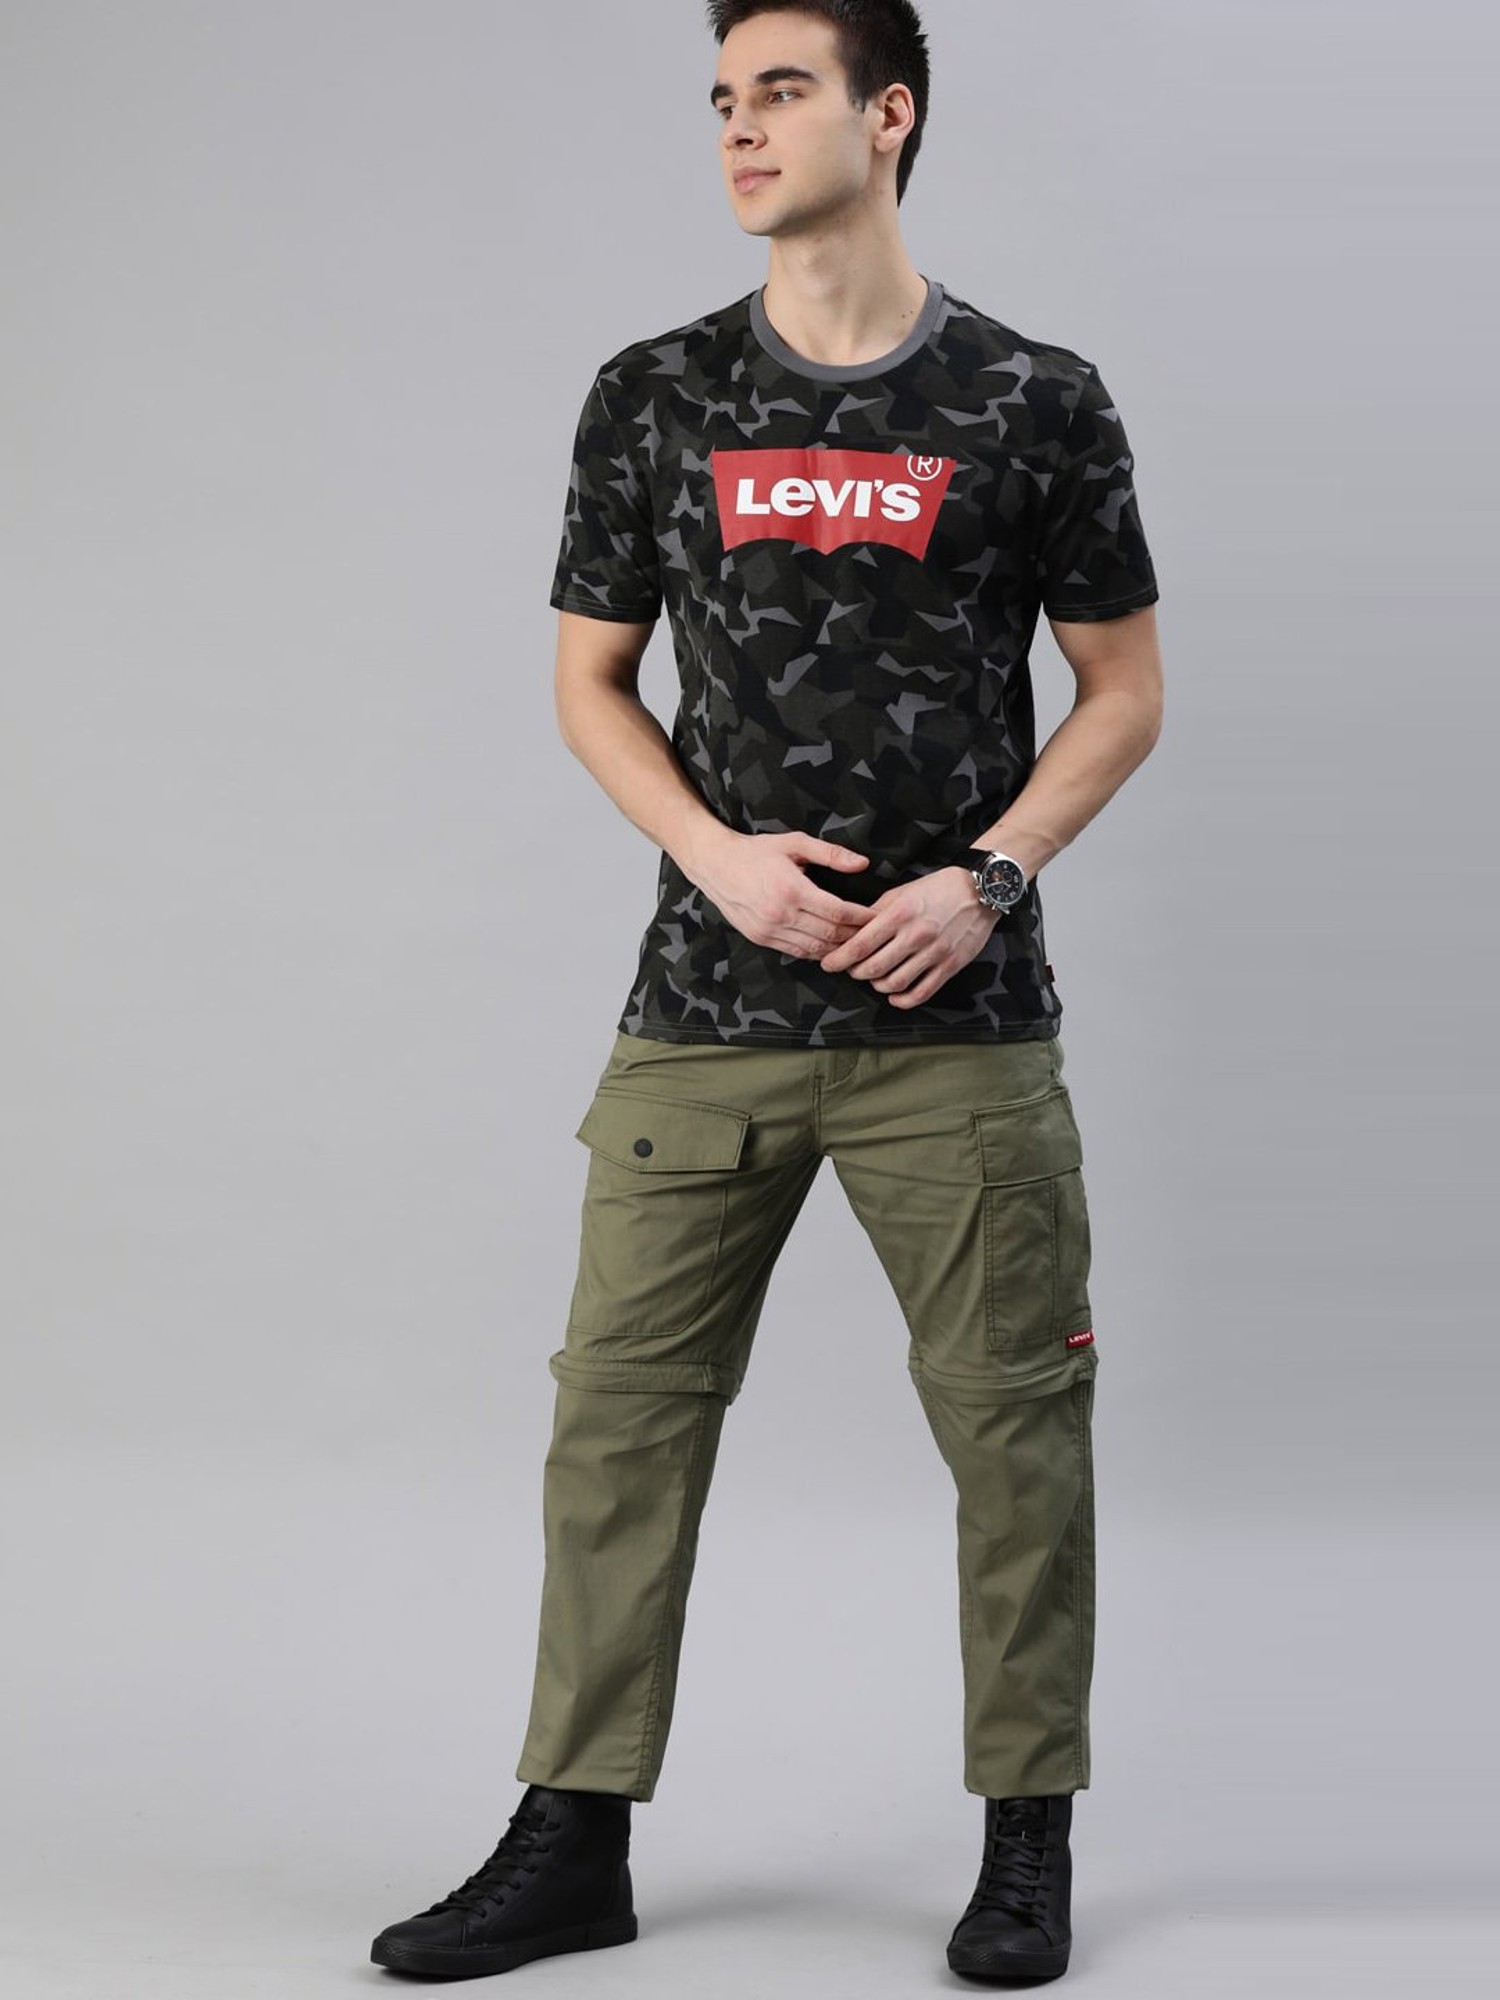 Levi's baggy trouser jeans in khaki | ASOS